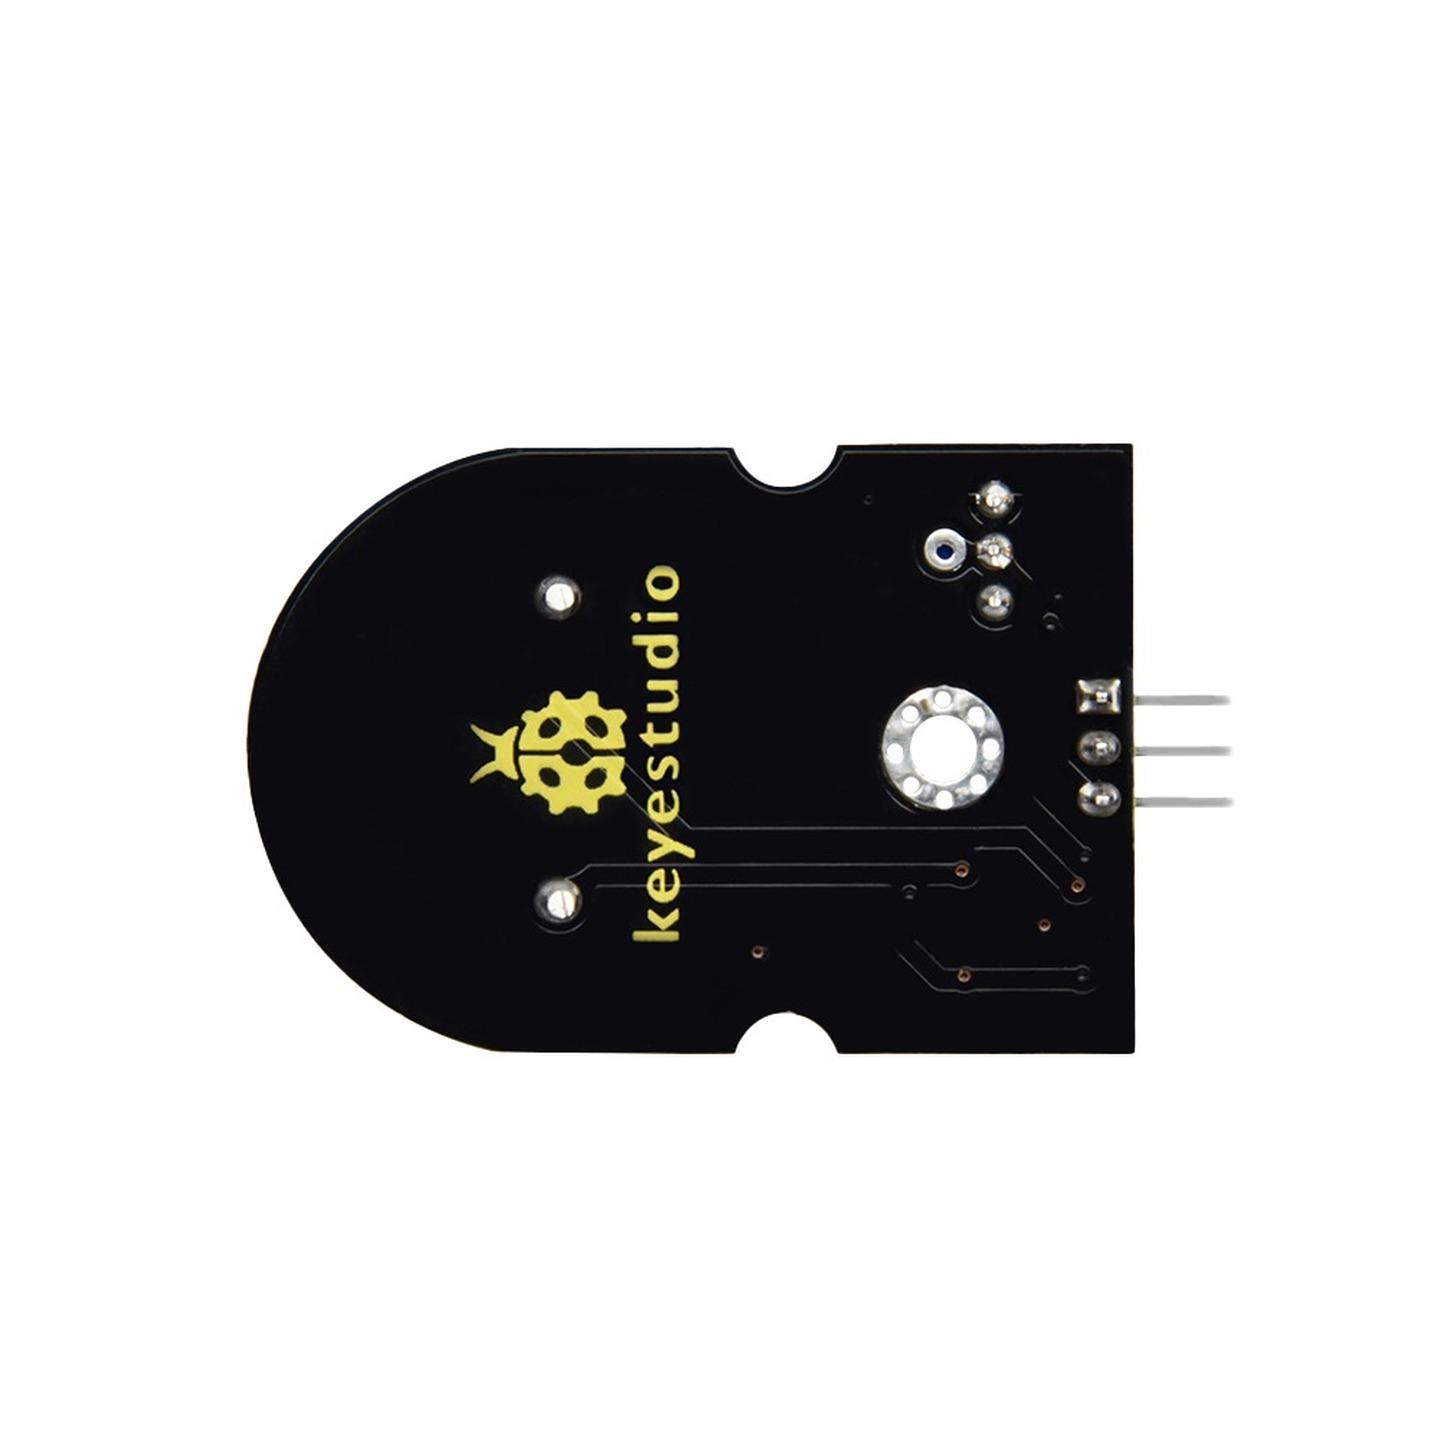 Arduino Compatible Audio Amplifier with Speaker Module